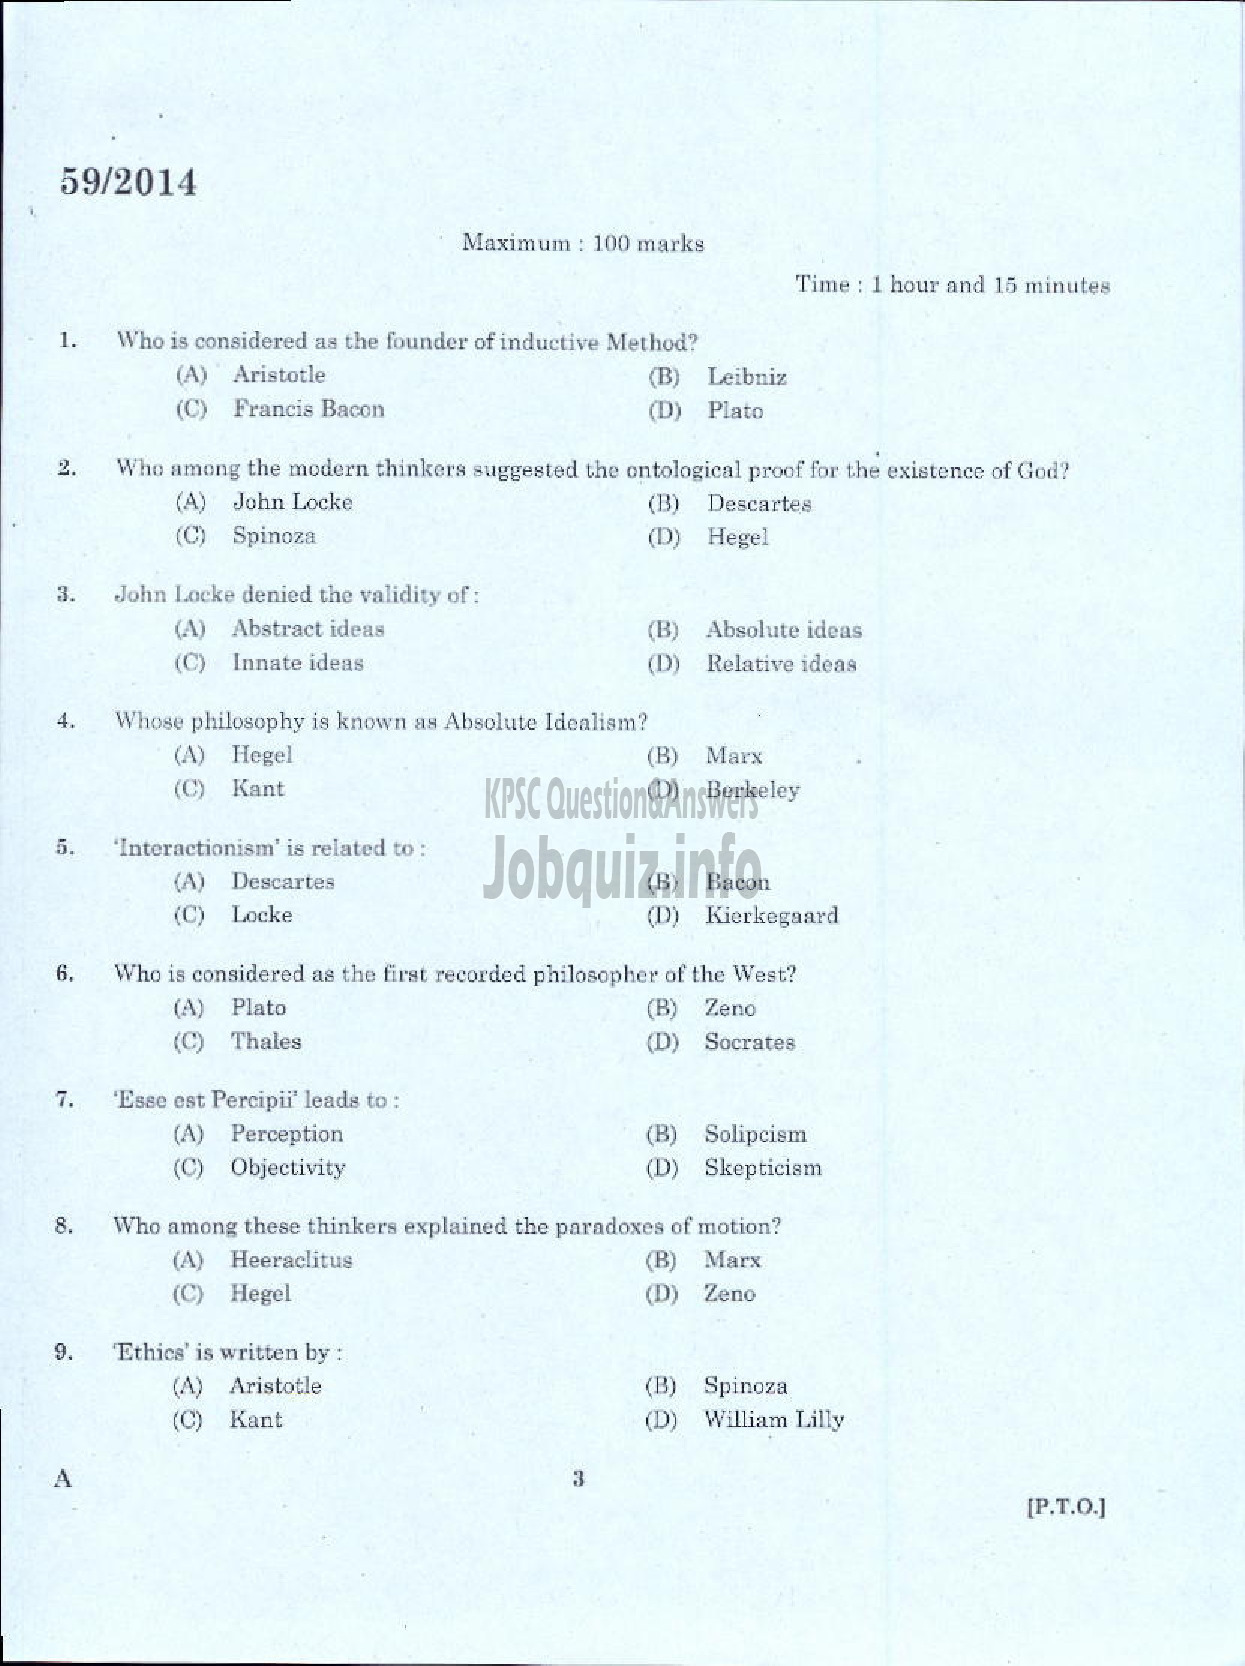 Kerala PSC Question Paper - LECTURER IN PHILOSOPHY KERALA COLLEGIATE EDUCATION-1